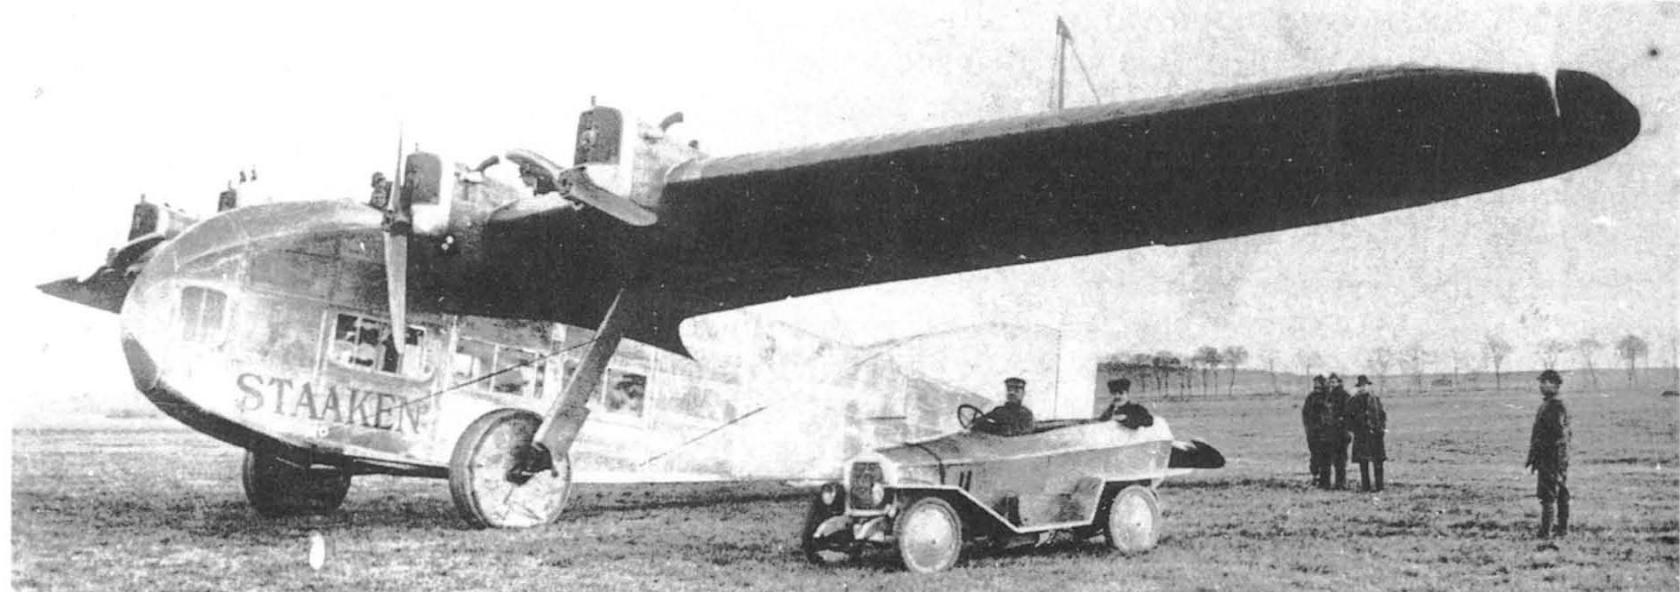 Тяжелые бомбардировщики Zeppelin-Werke. Пассажирский самолет Staaken E.4/20. Германия